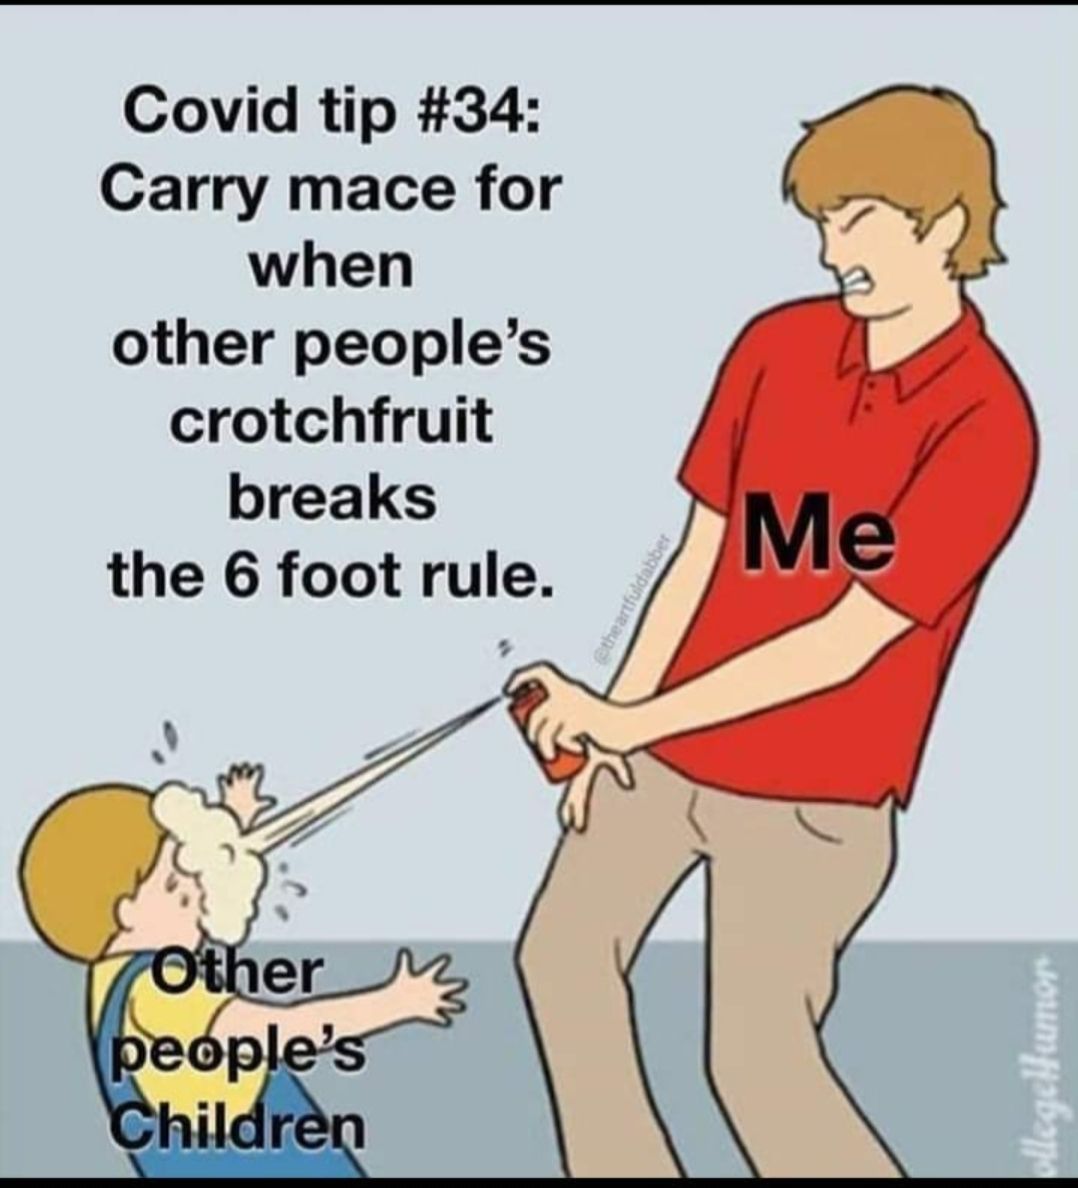 Covid tip #34